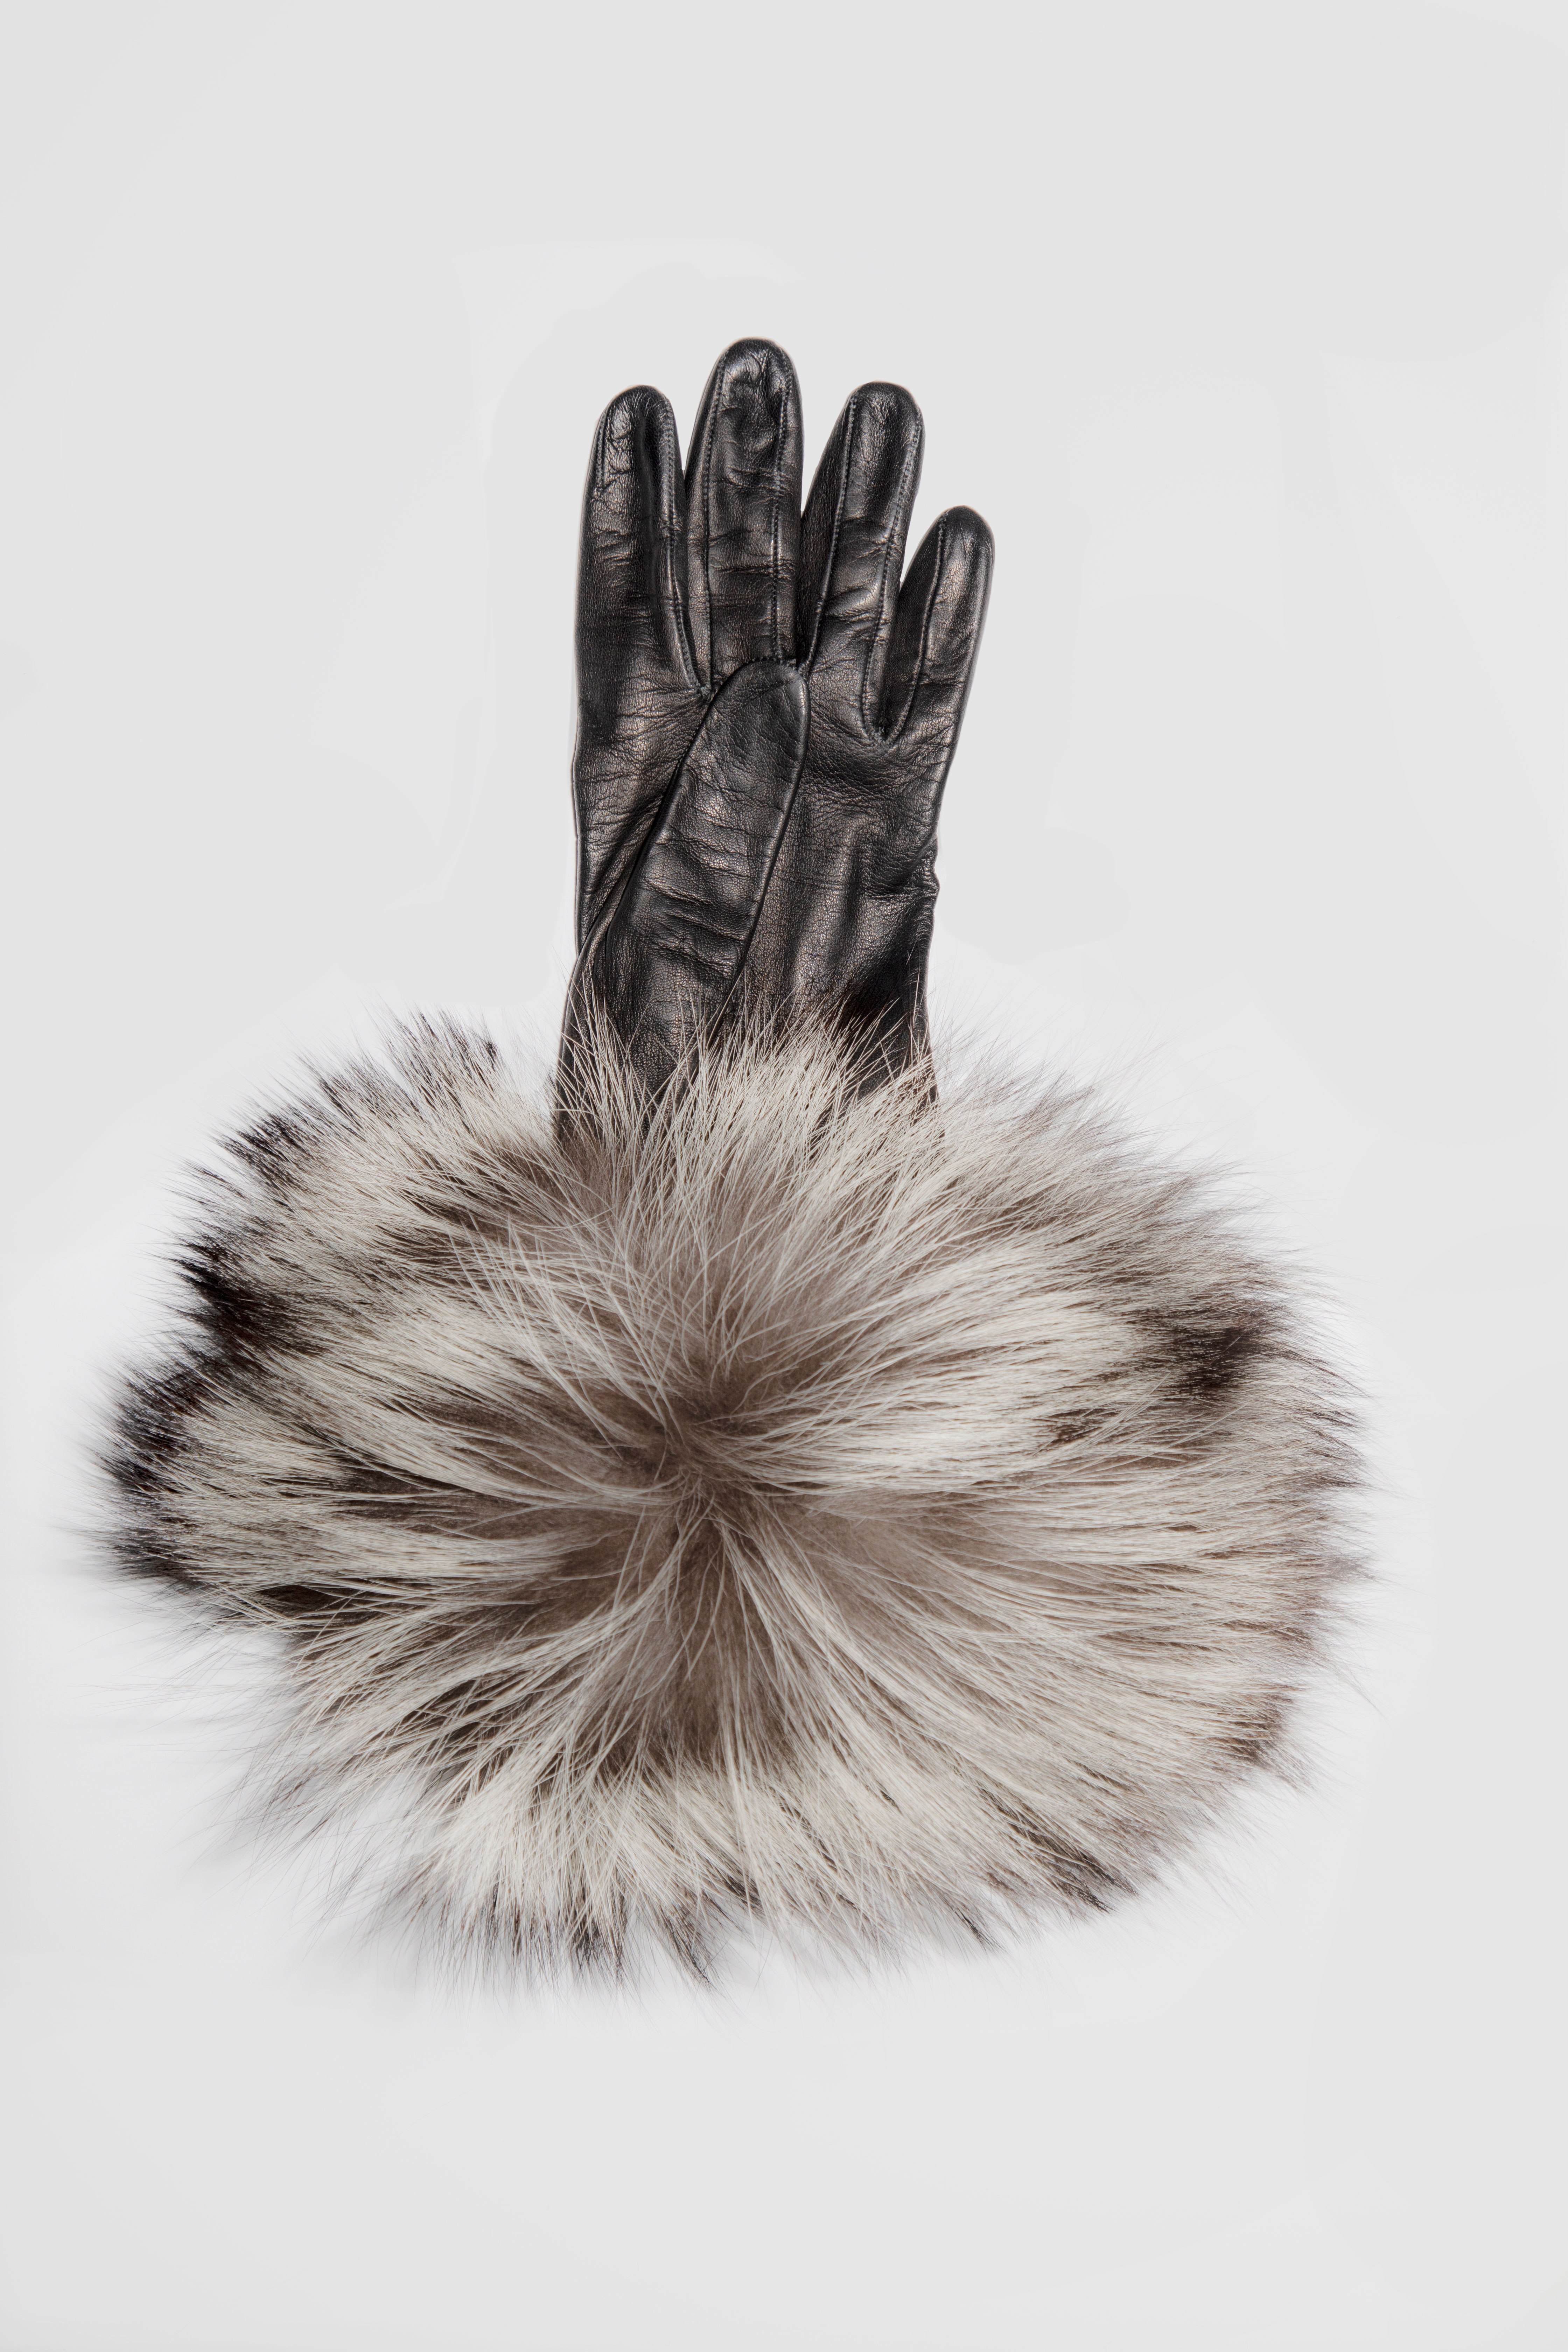 Guanti in pelle con Pelliccia da DONNA WP13  ELVIFRA fashion accessories  handmade in Italy store online